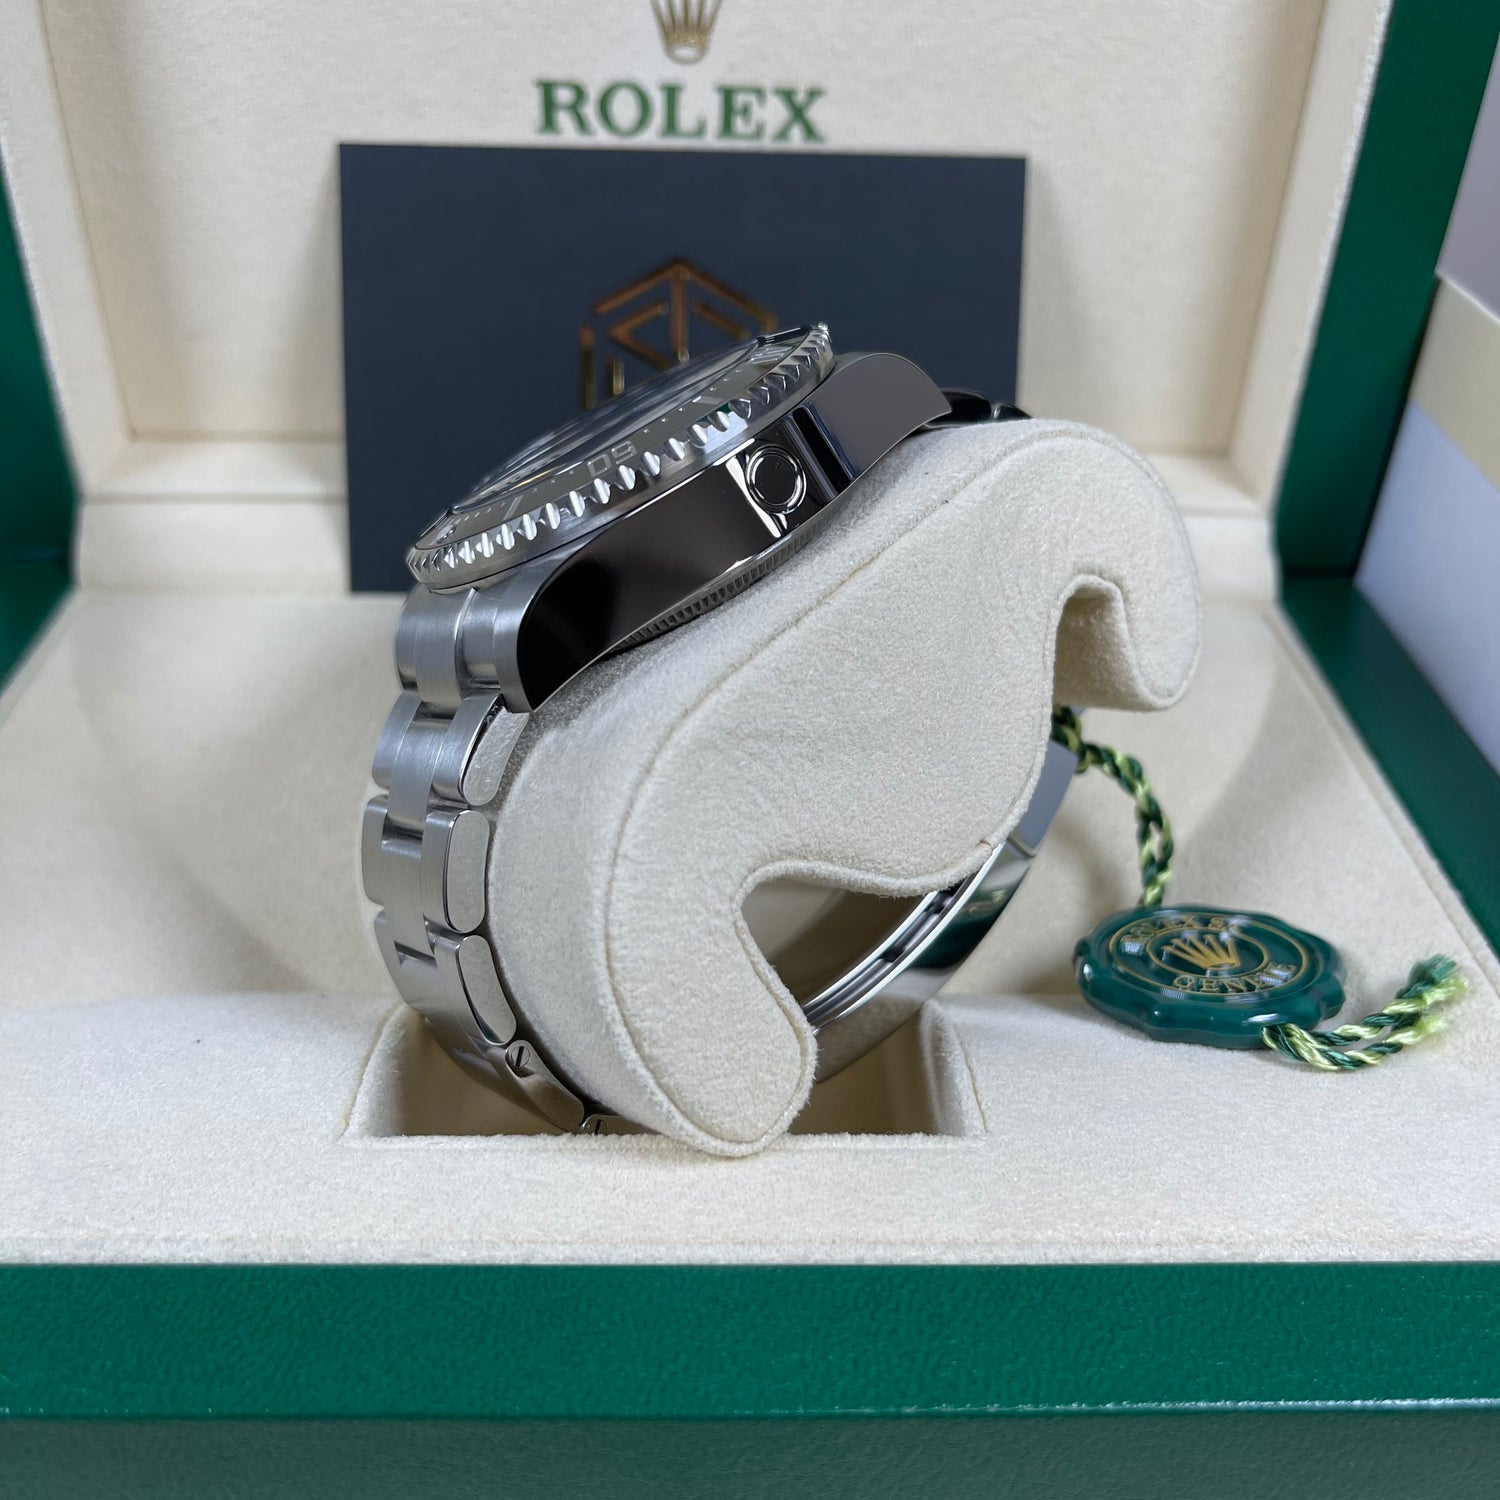 Rolex DeepSea James Cameron 126660 2020 Brand New Full Set Watch